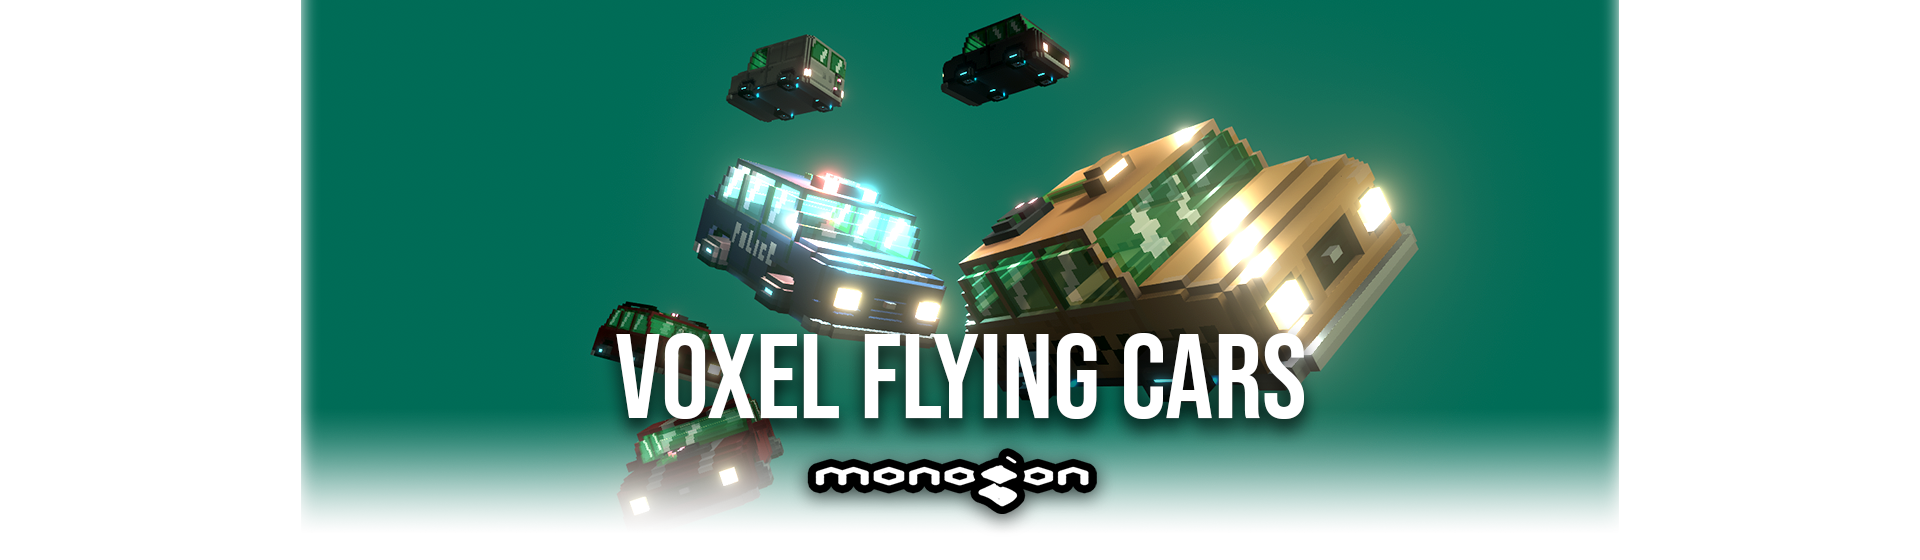 Voxel Flying Cars